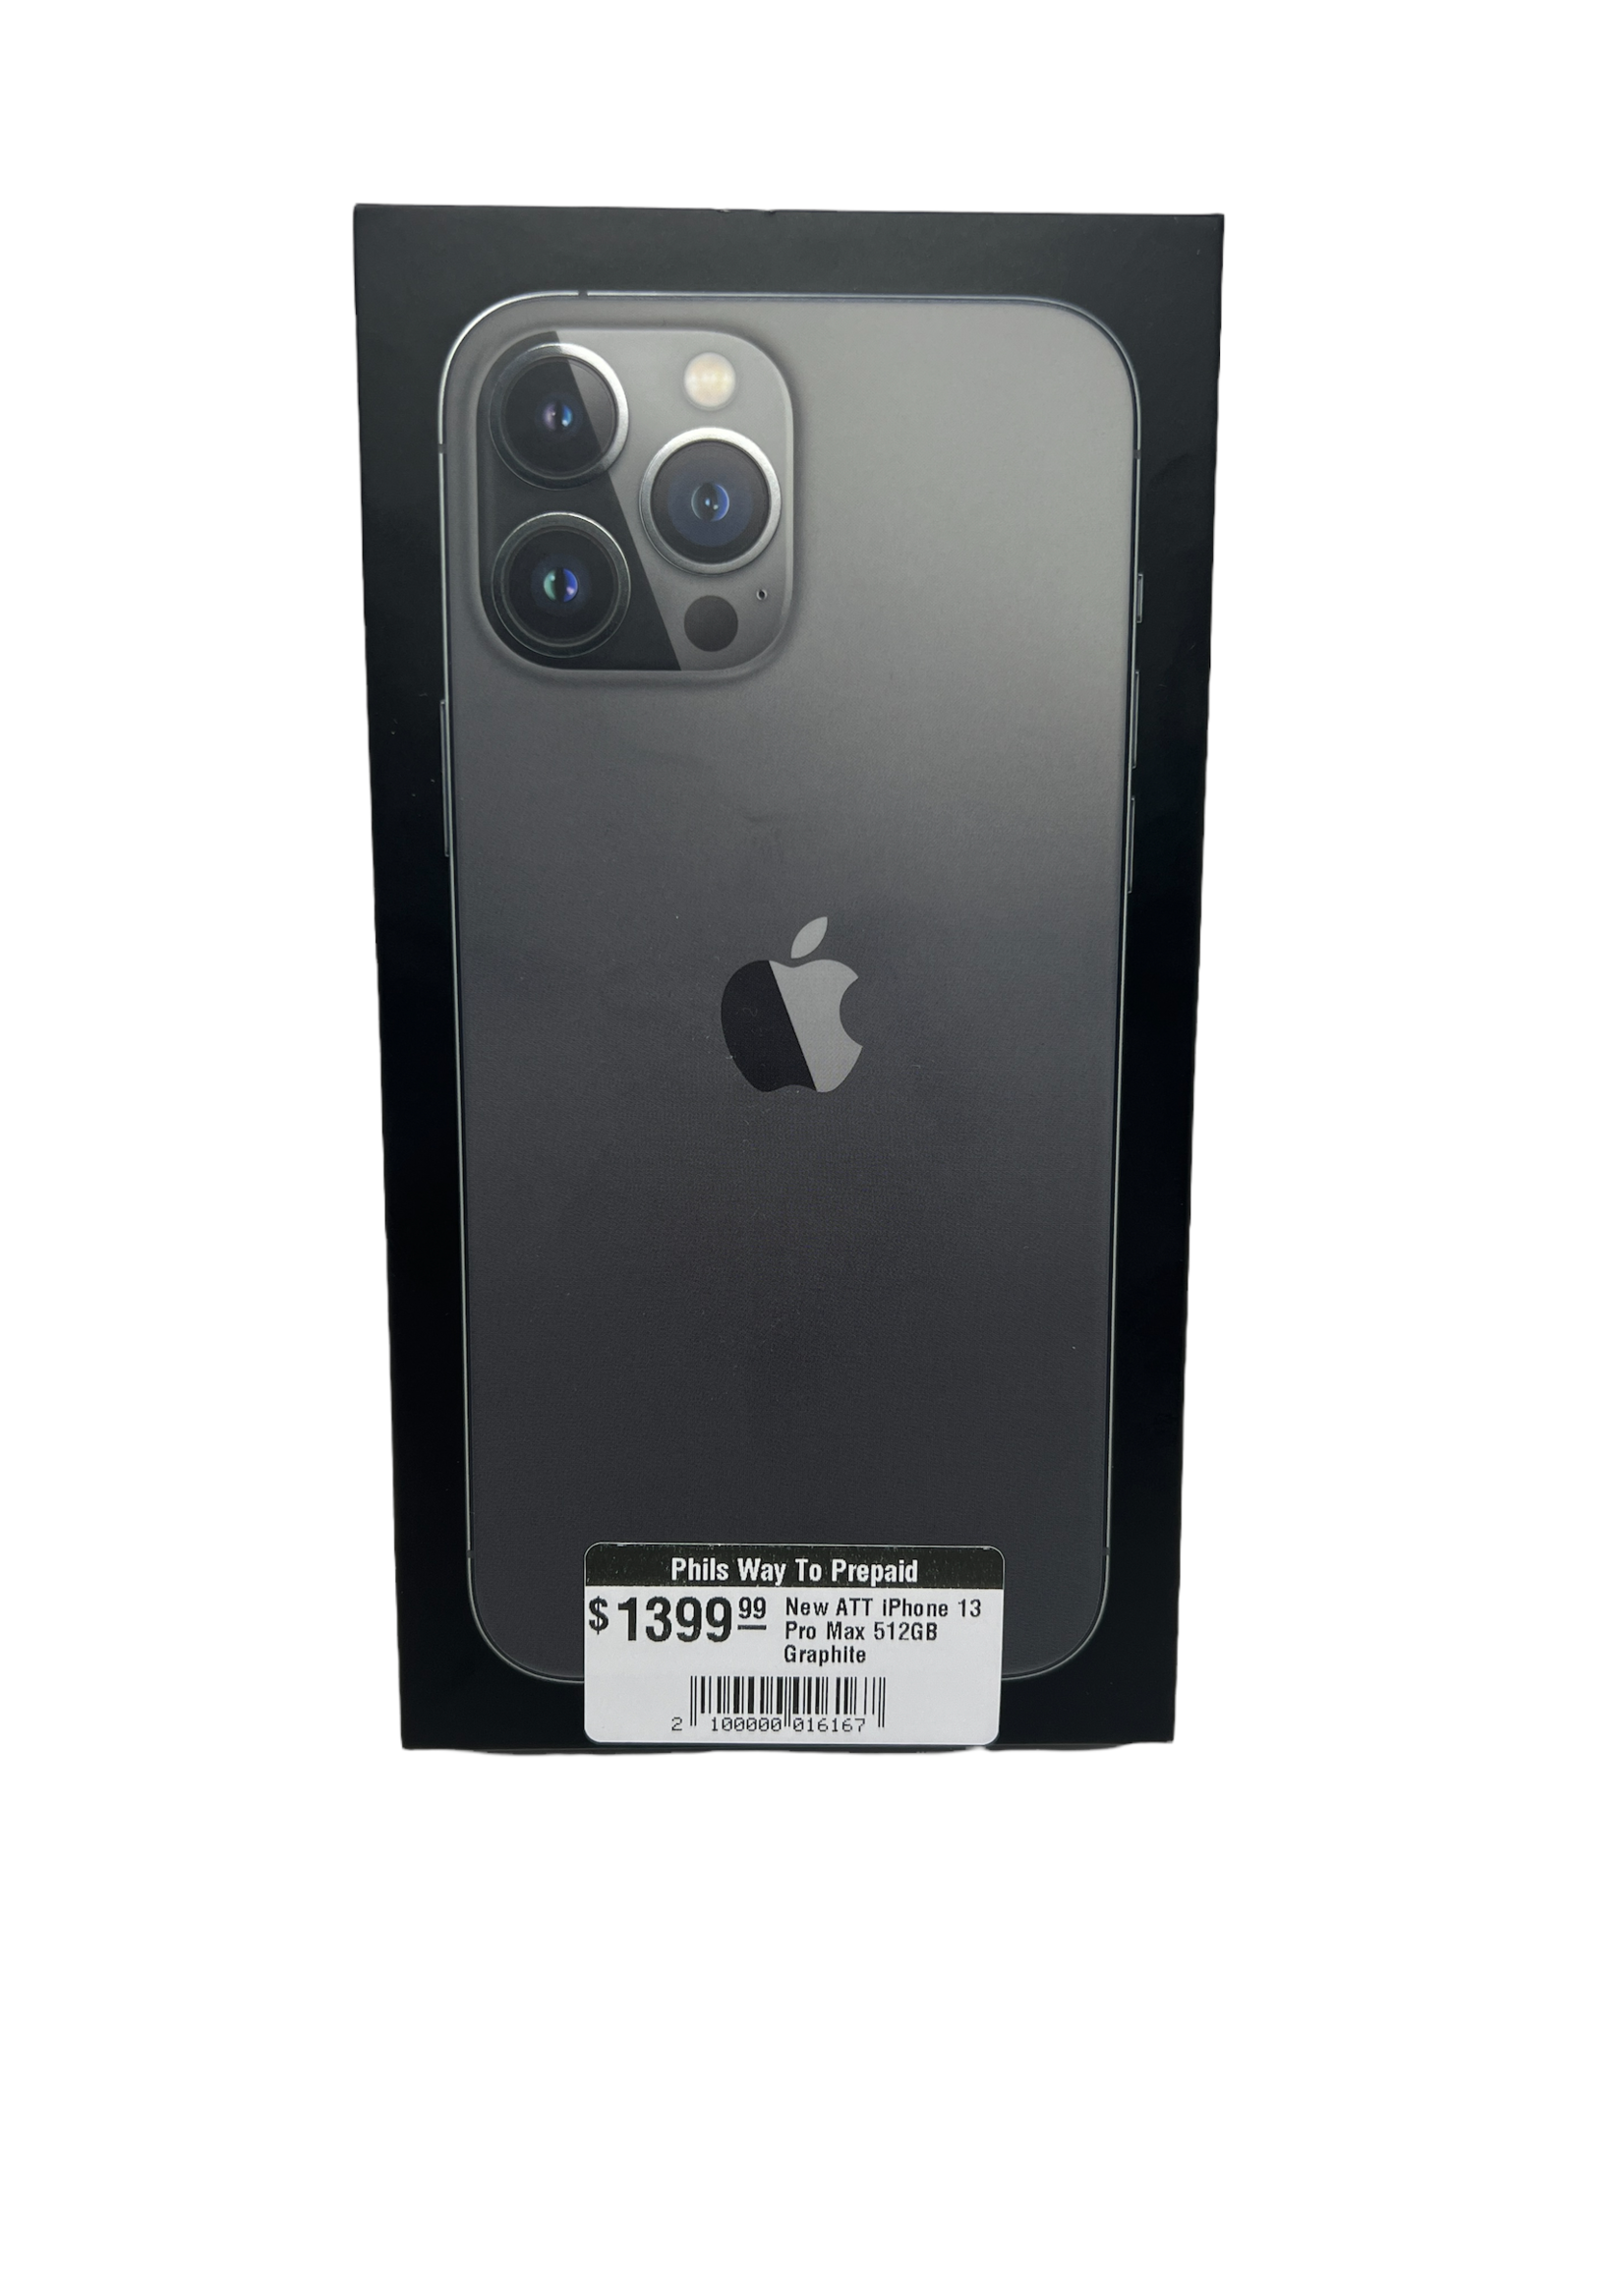 Apple New ATT iPhone 13 Pro Max 512GB Graphite